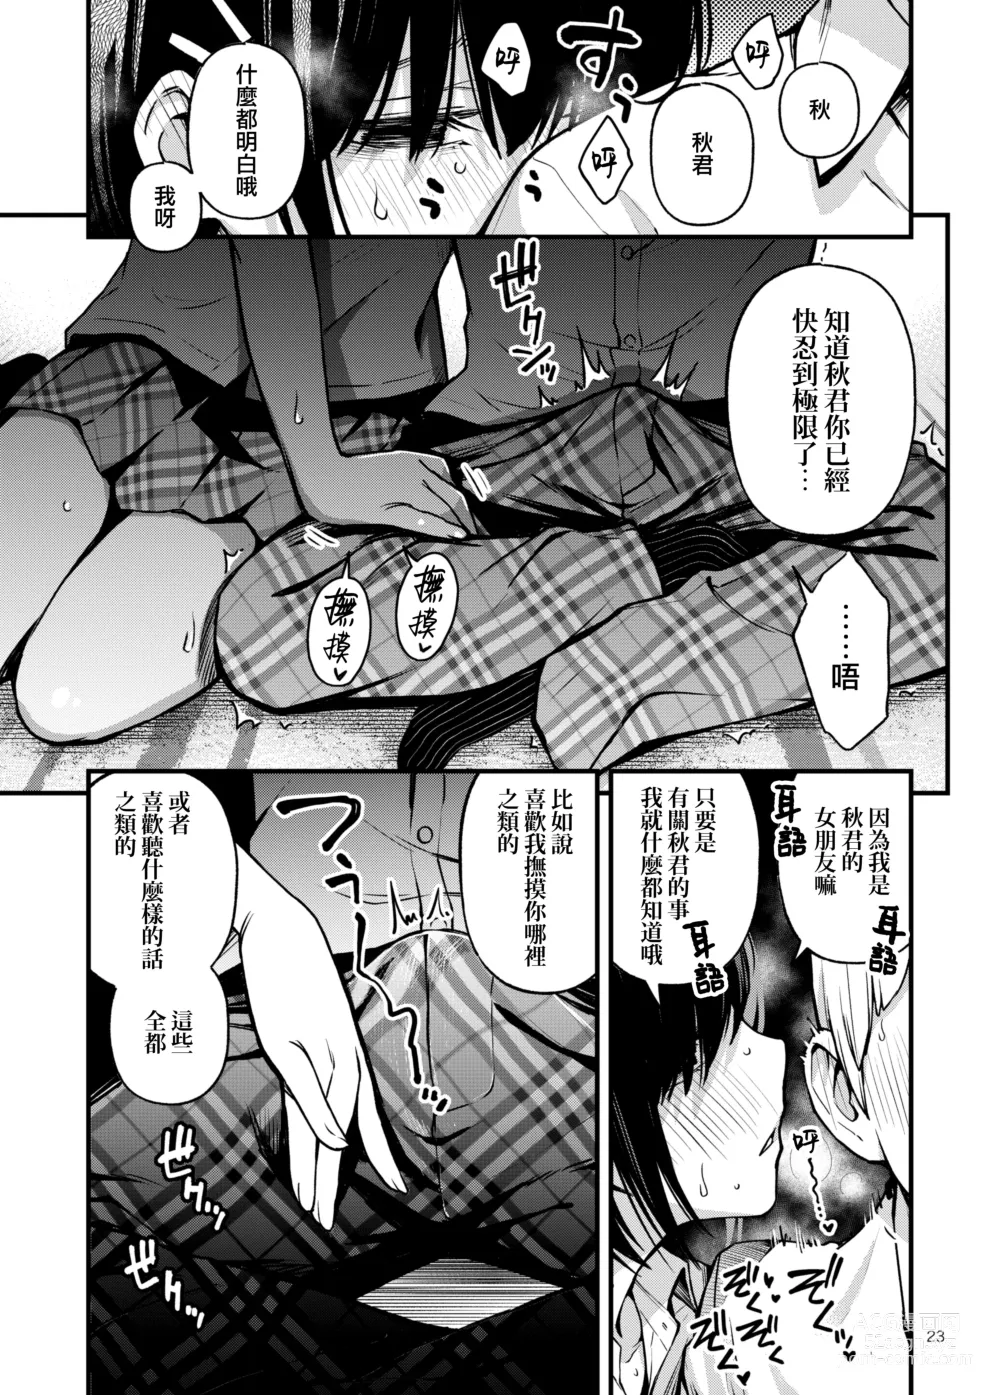 Page 23 of doujinshi 与处男初体验时觉醒的处女 2 #1-4